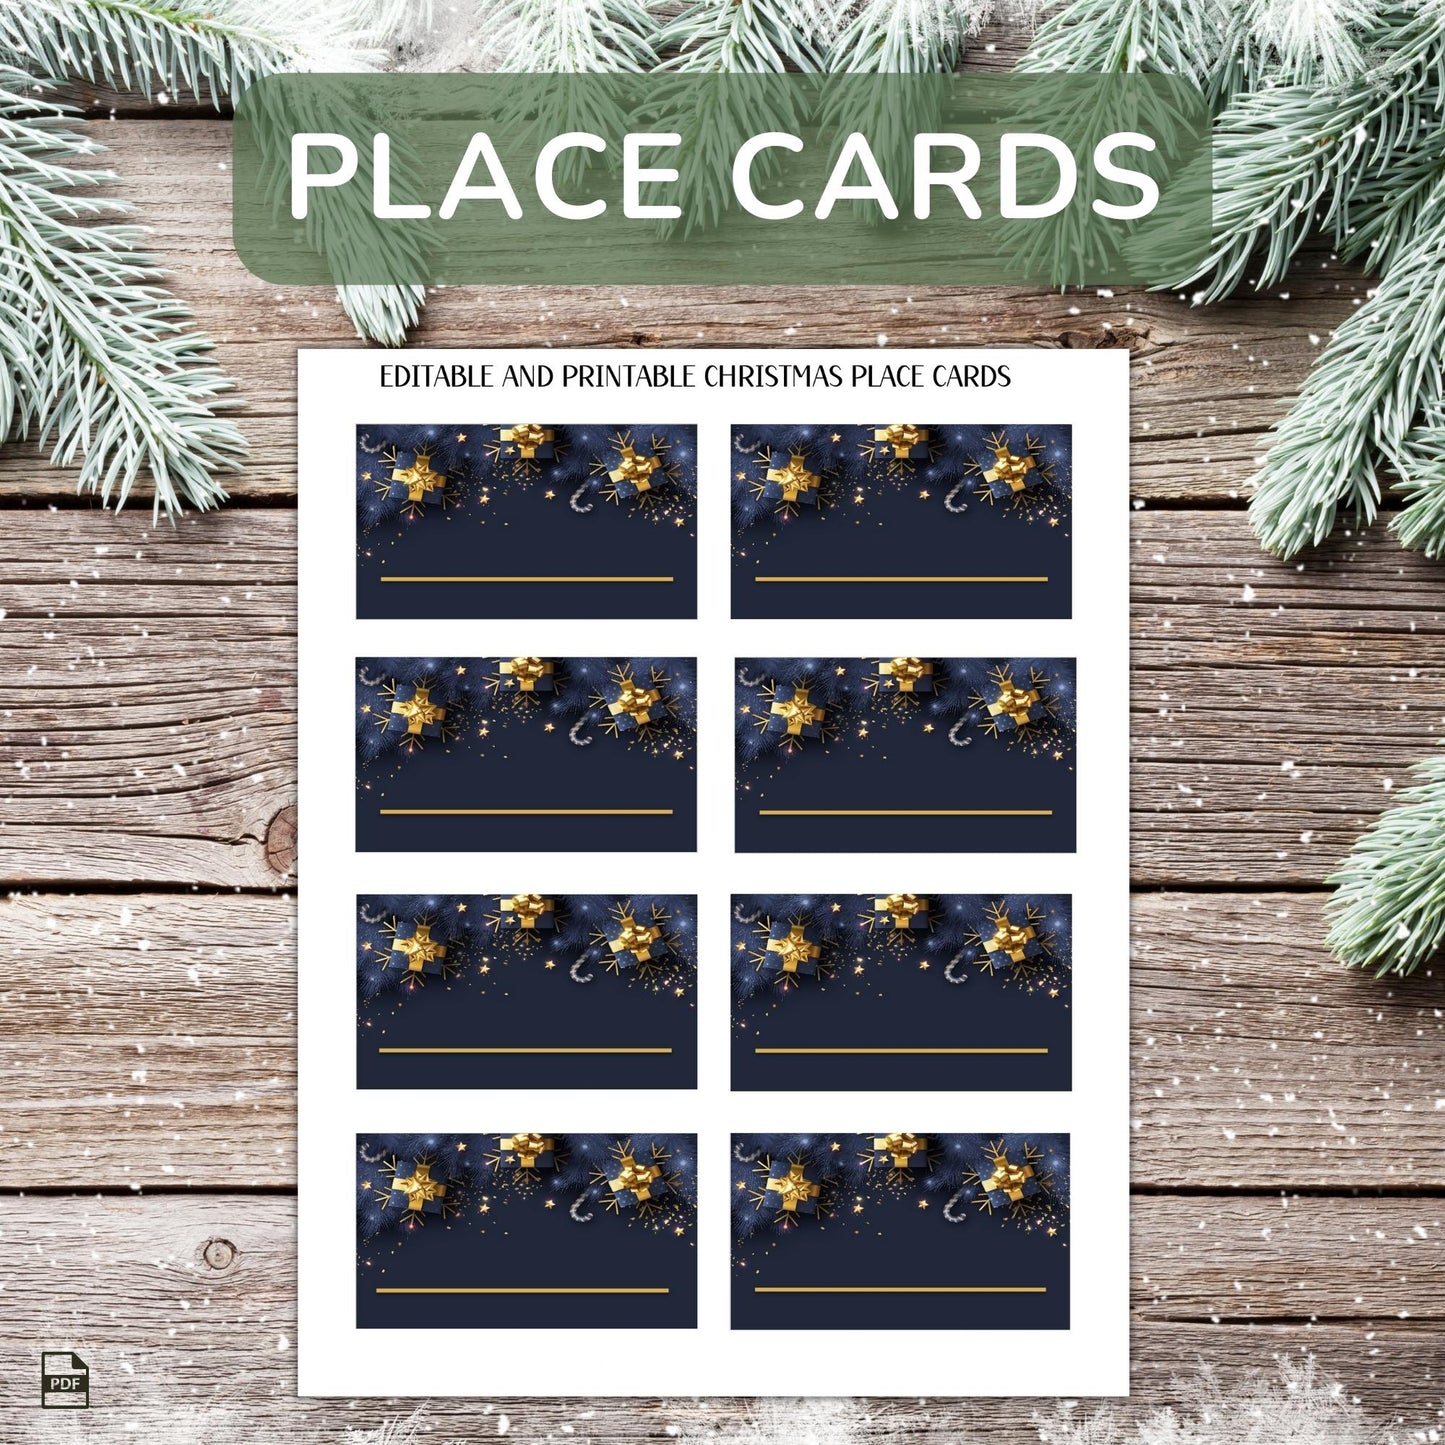 Printable Holiday Card Set - Navy Festive